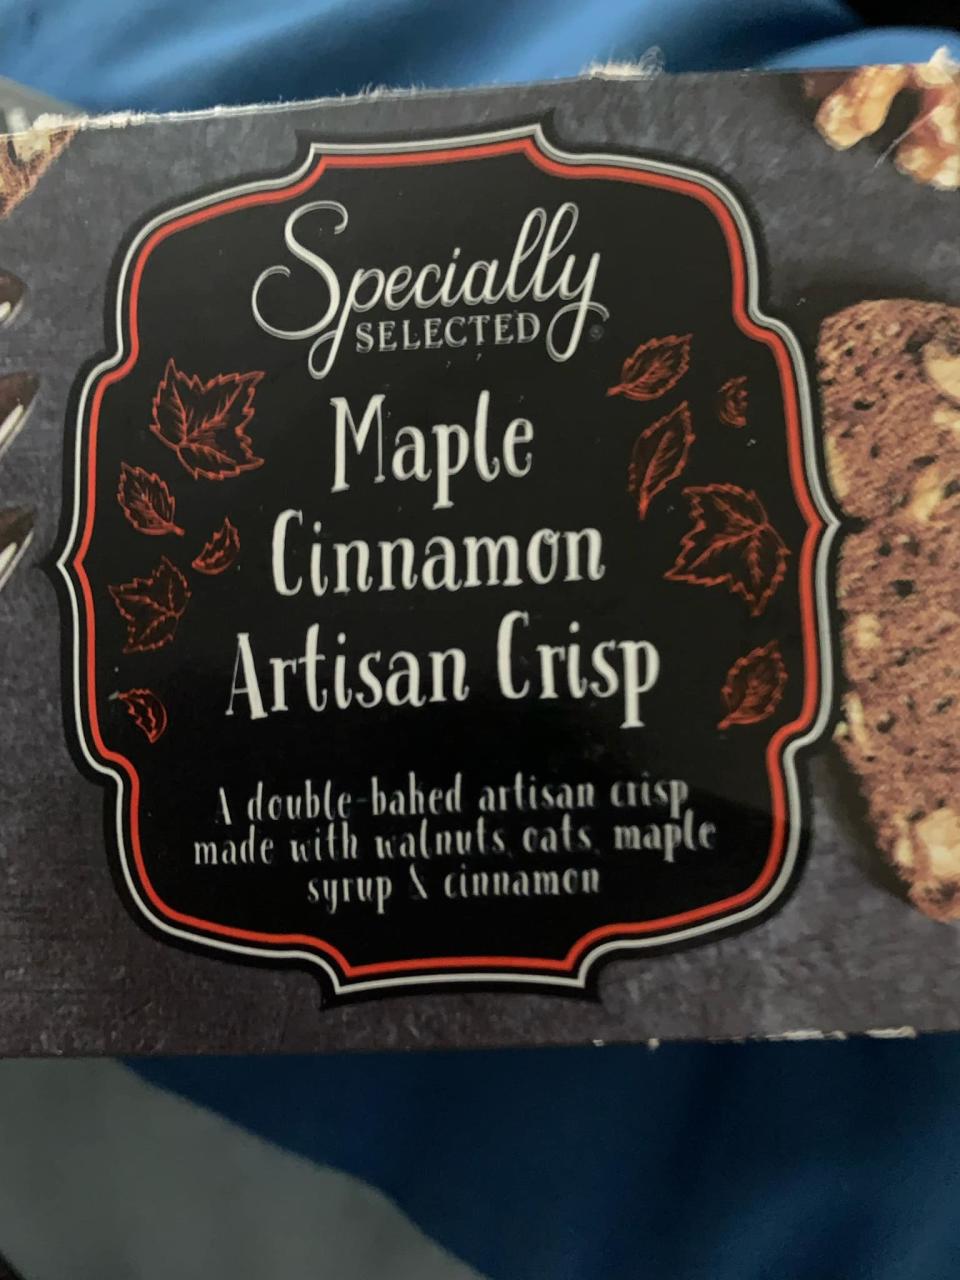 A box of Aldi artisan crispbread featuring a confusing ingredients list